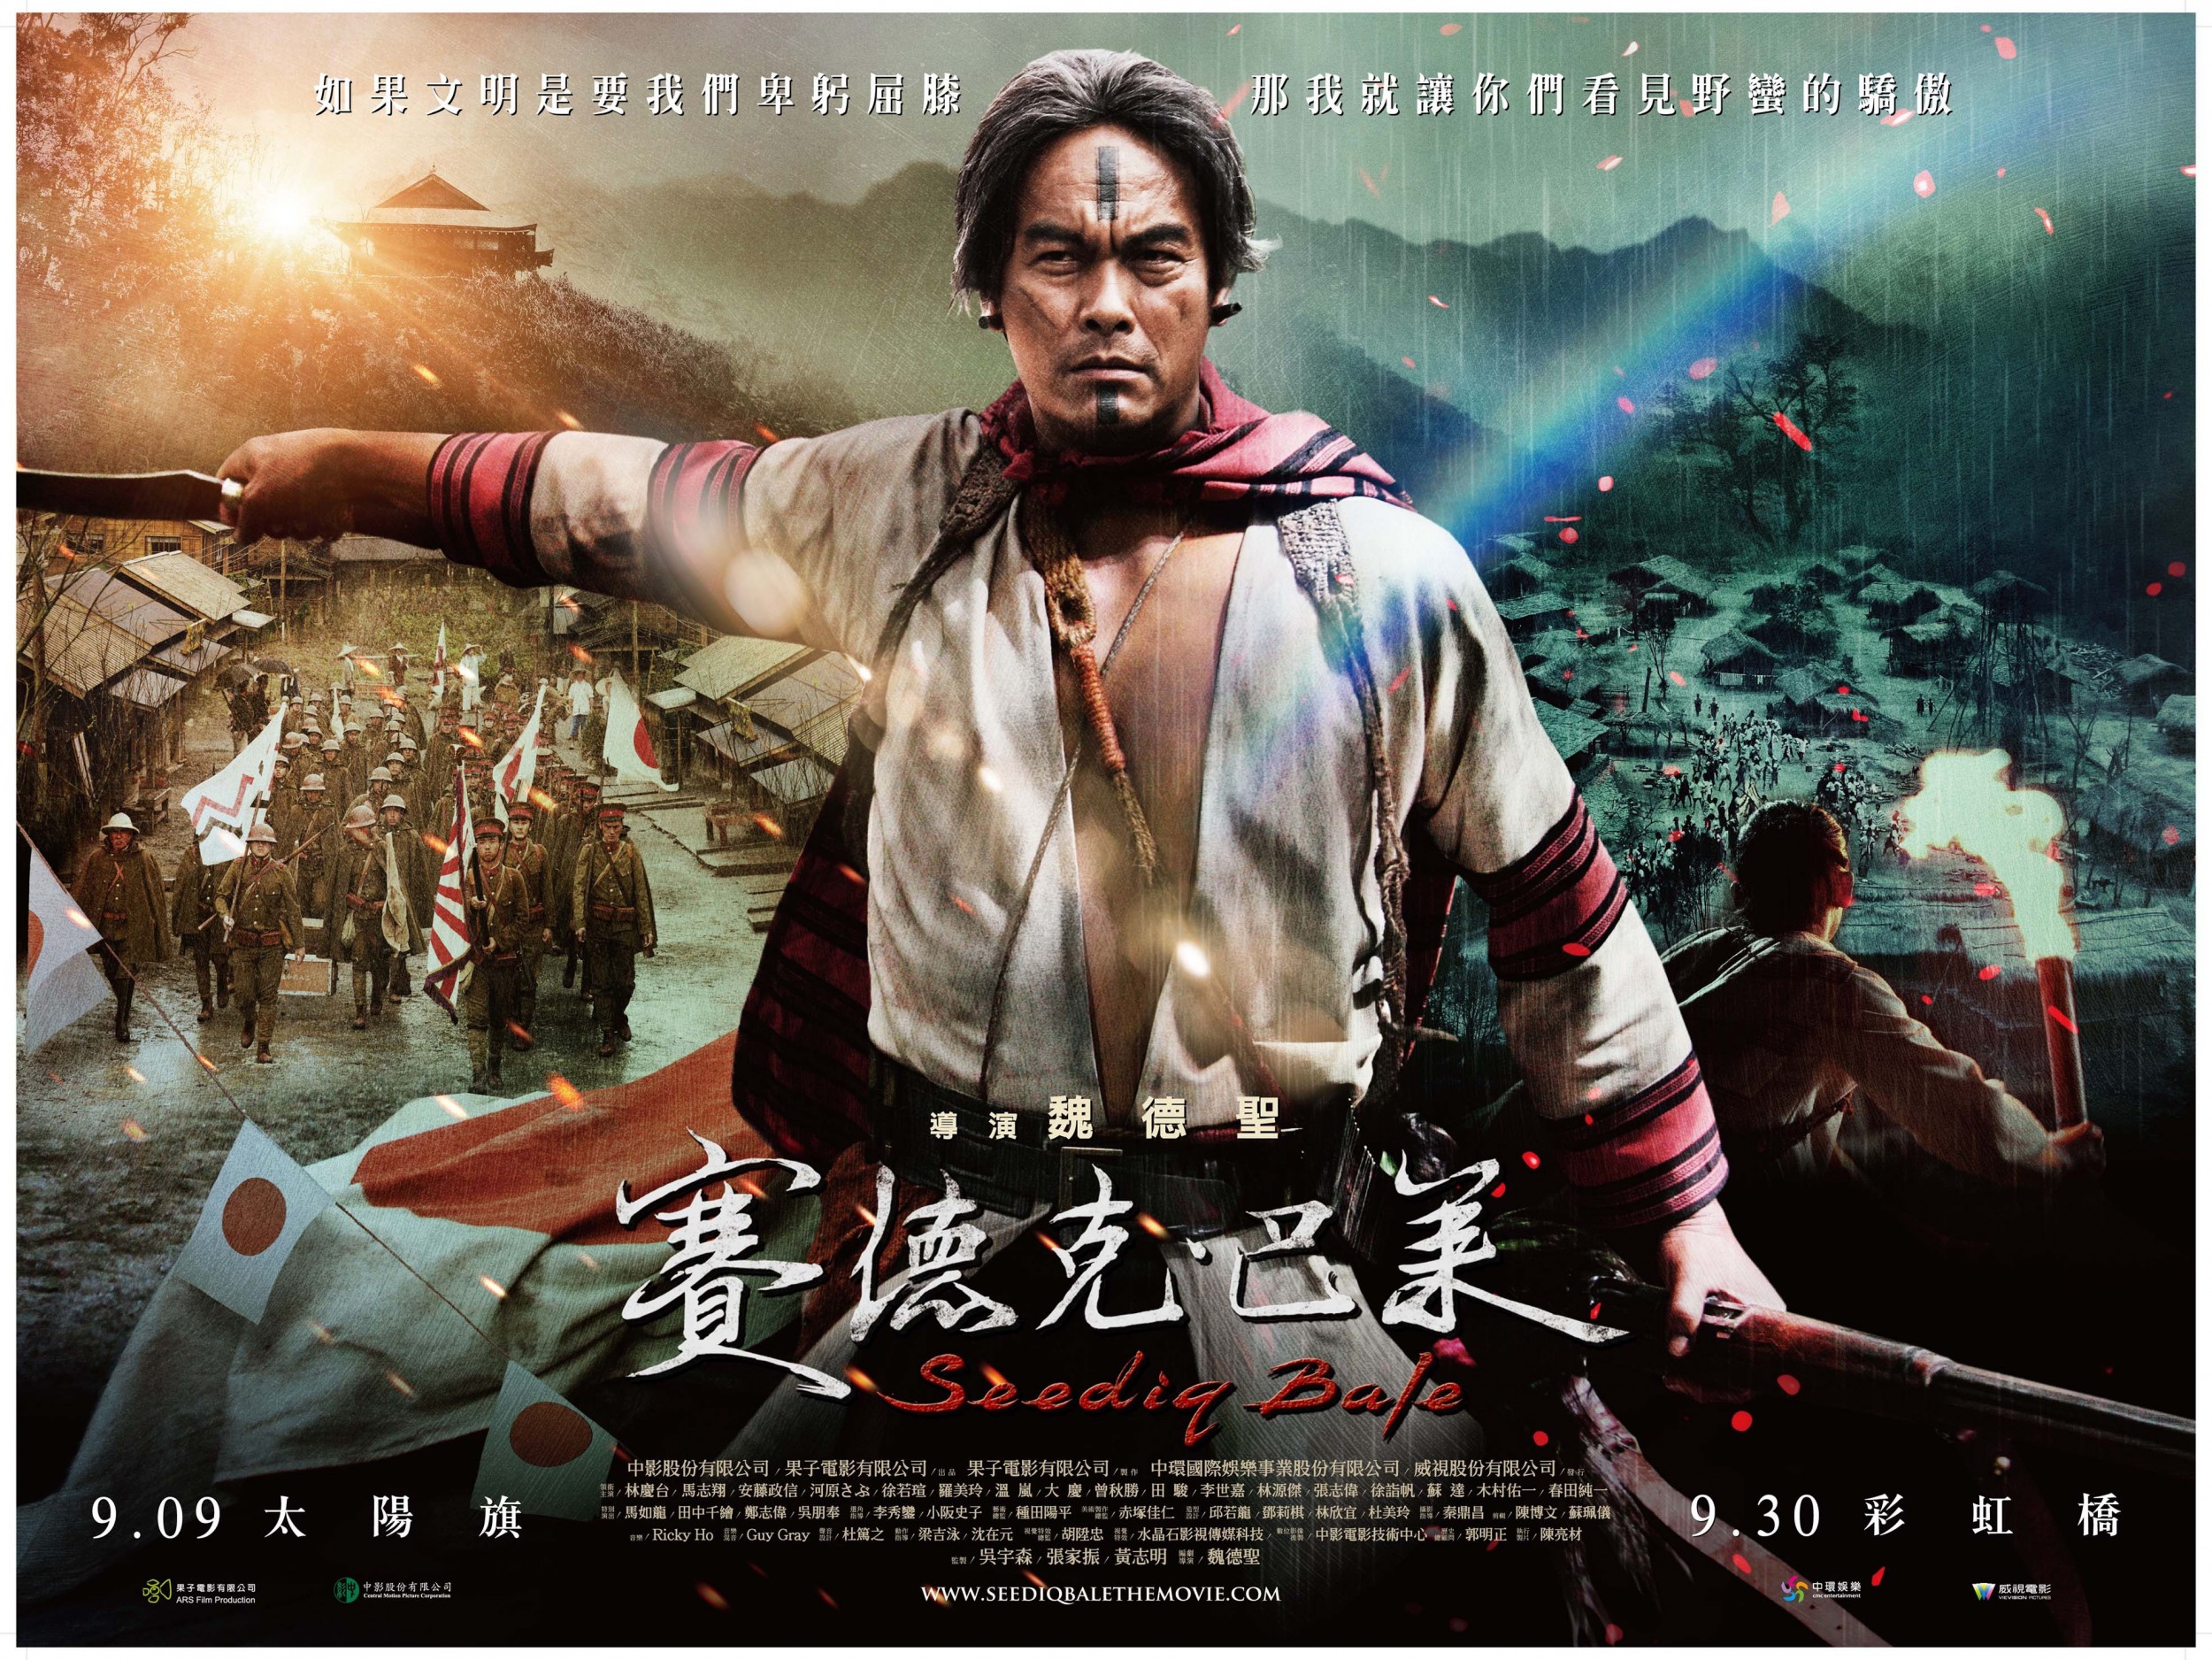 Mega Sized Movie Poster Image for Seediq Bale (#13 of 16)